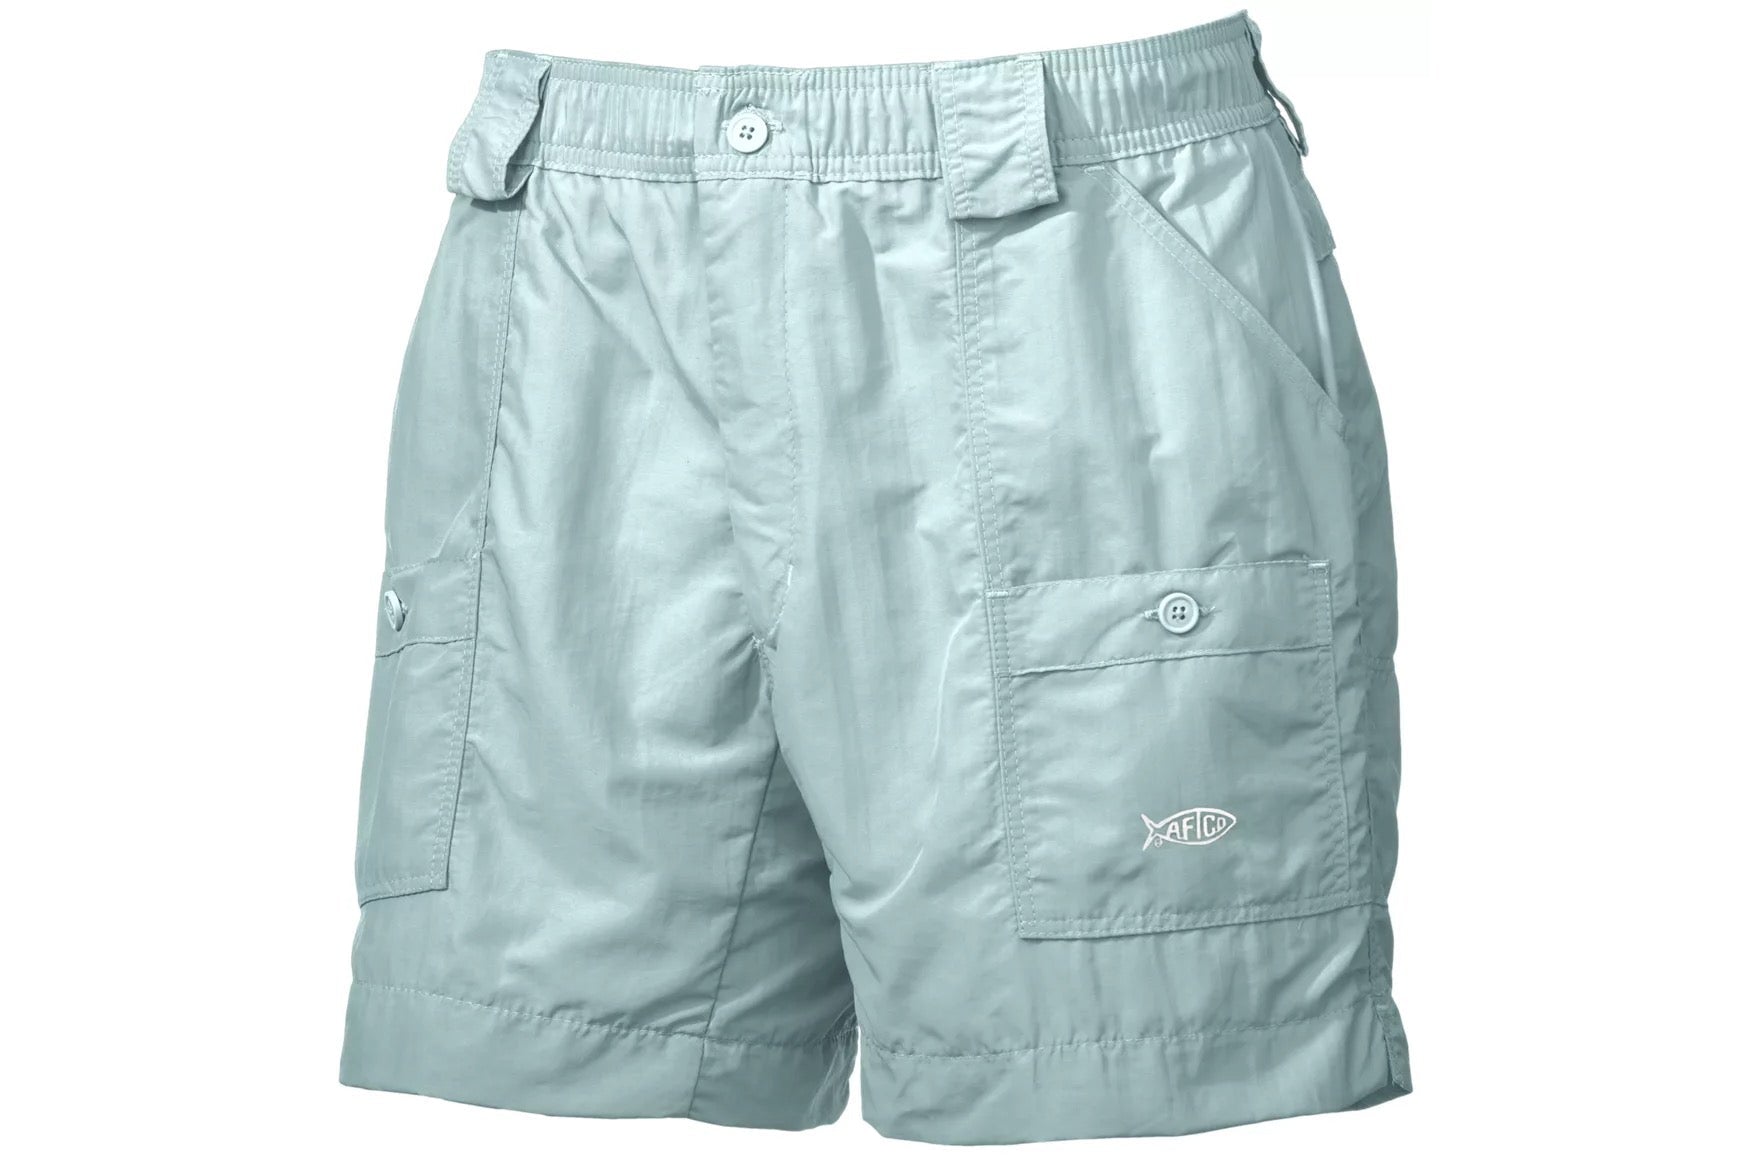 AFTCO- Original Fishing Shorts Long, Charcoal 36